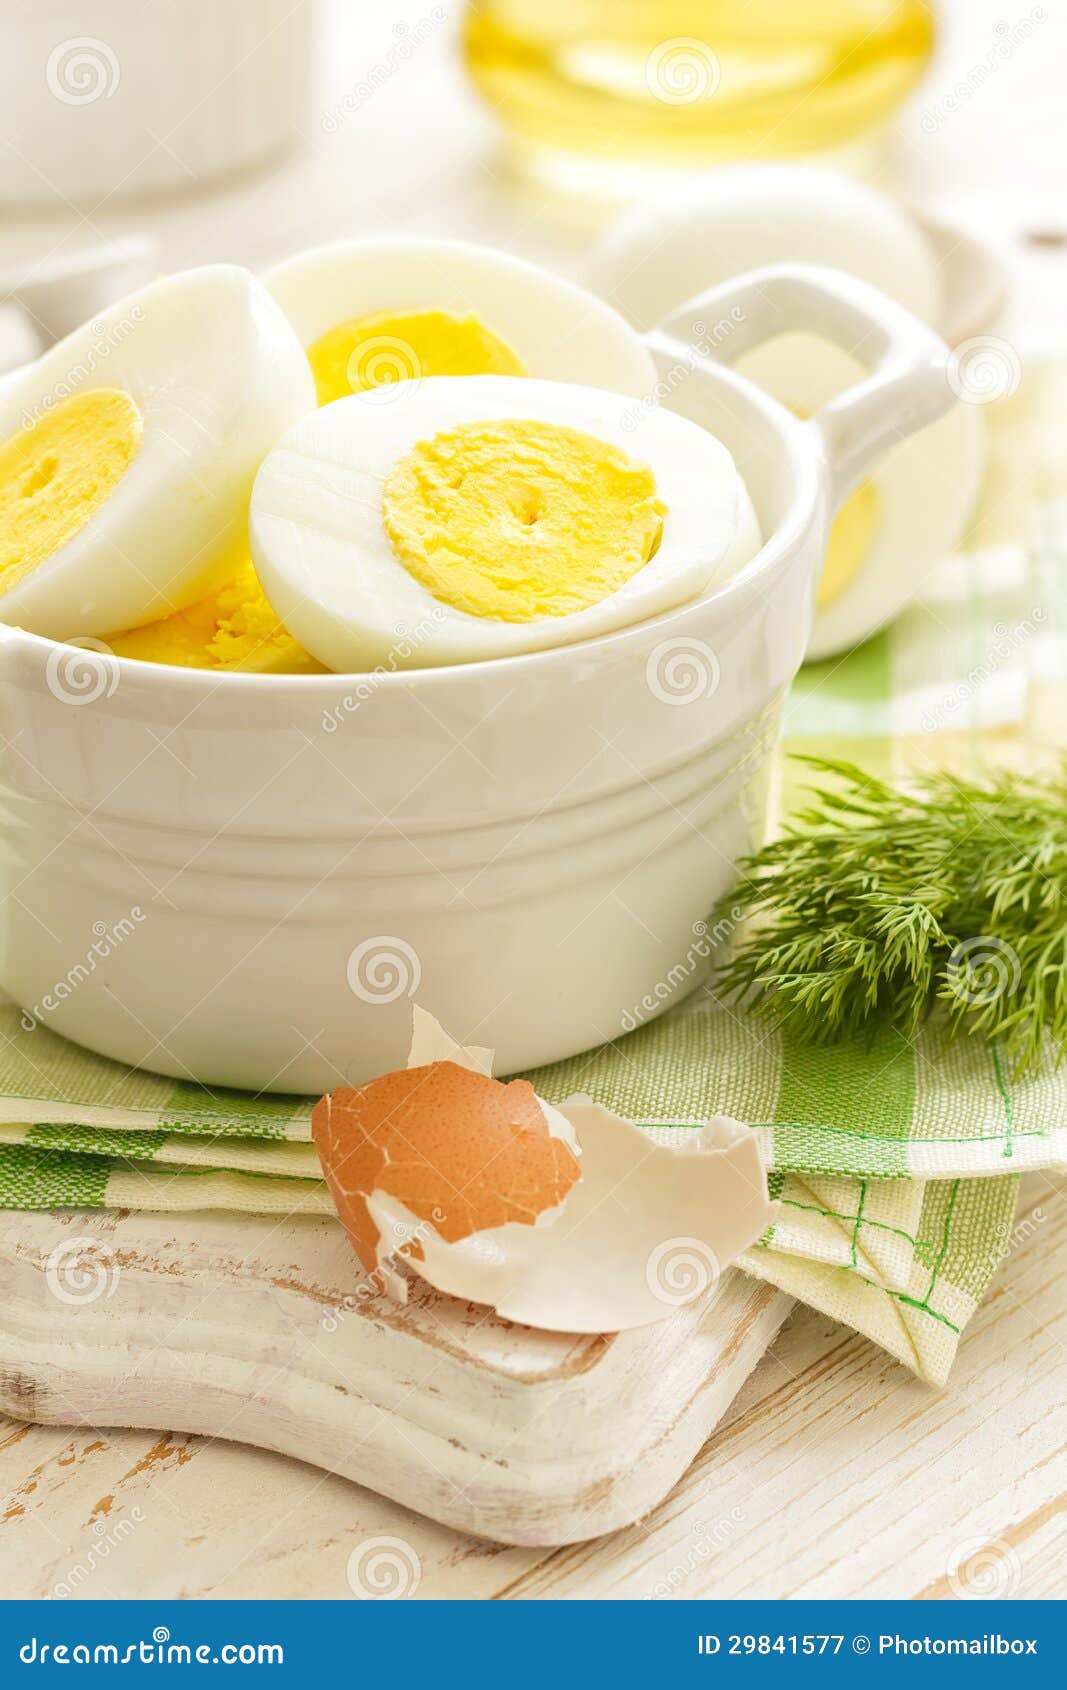 Boiled eggs in a rustic pannikin